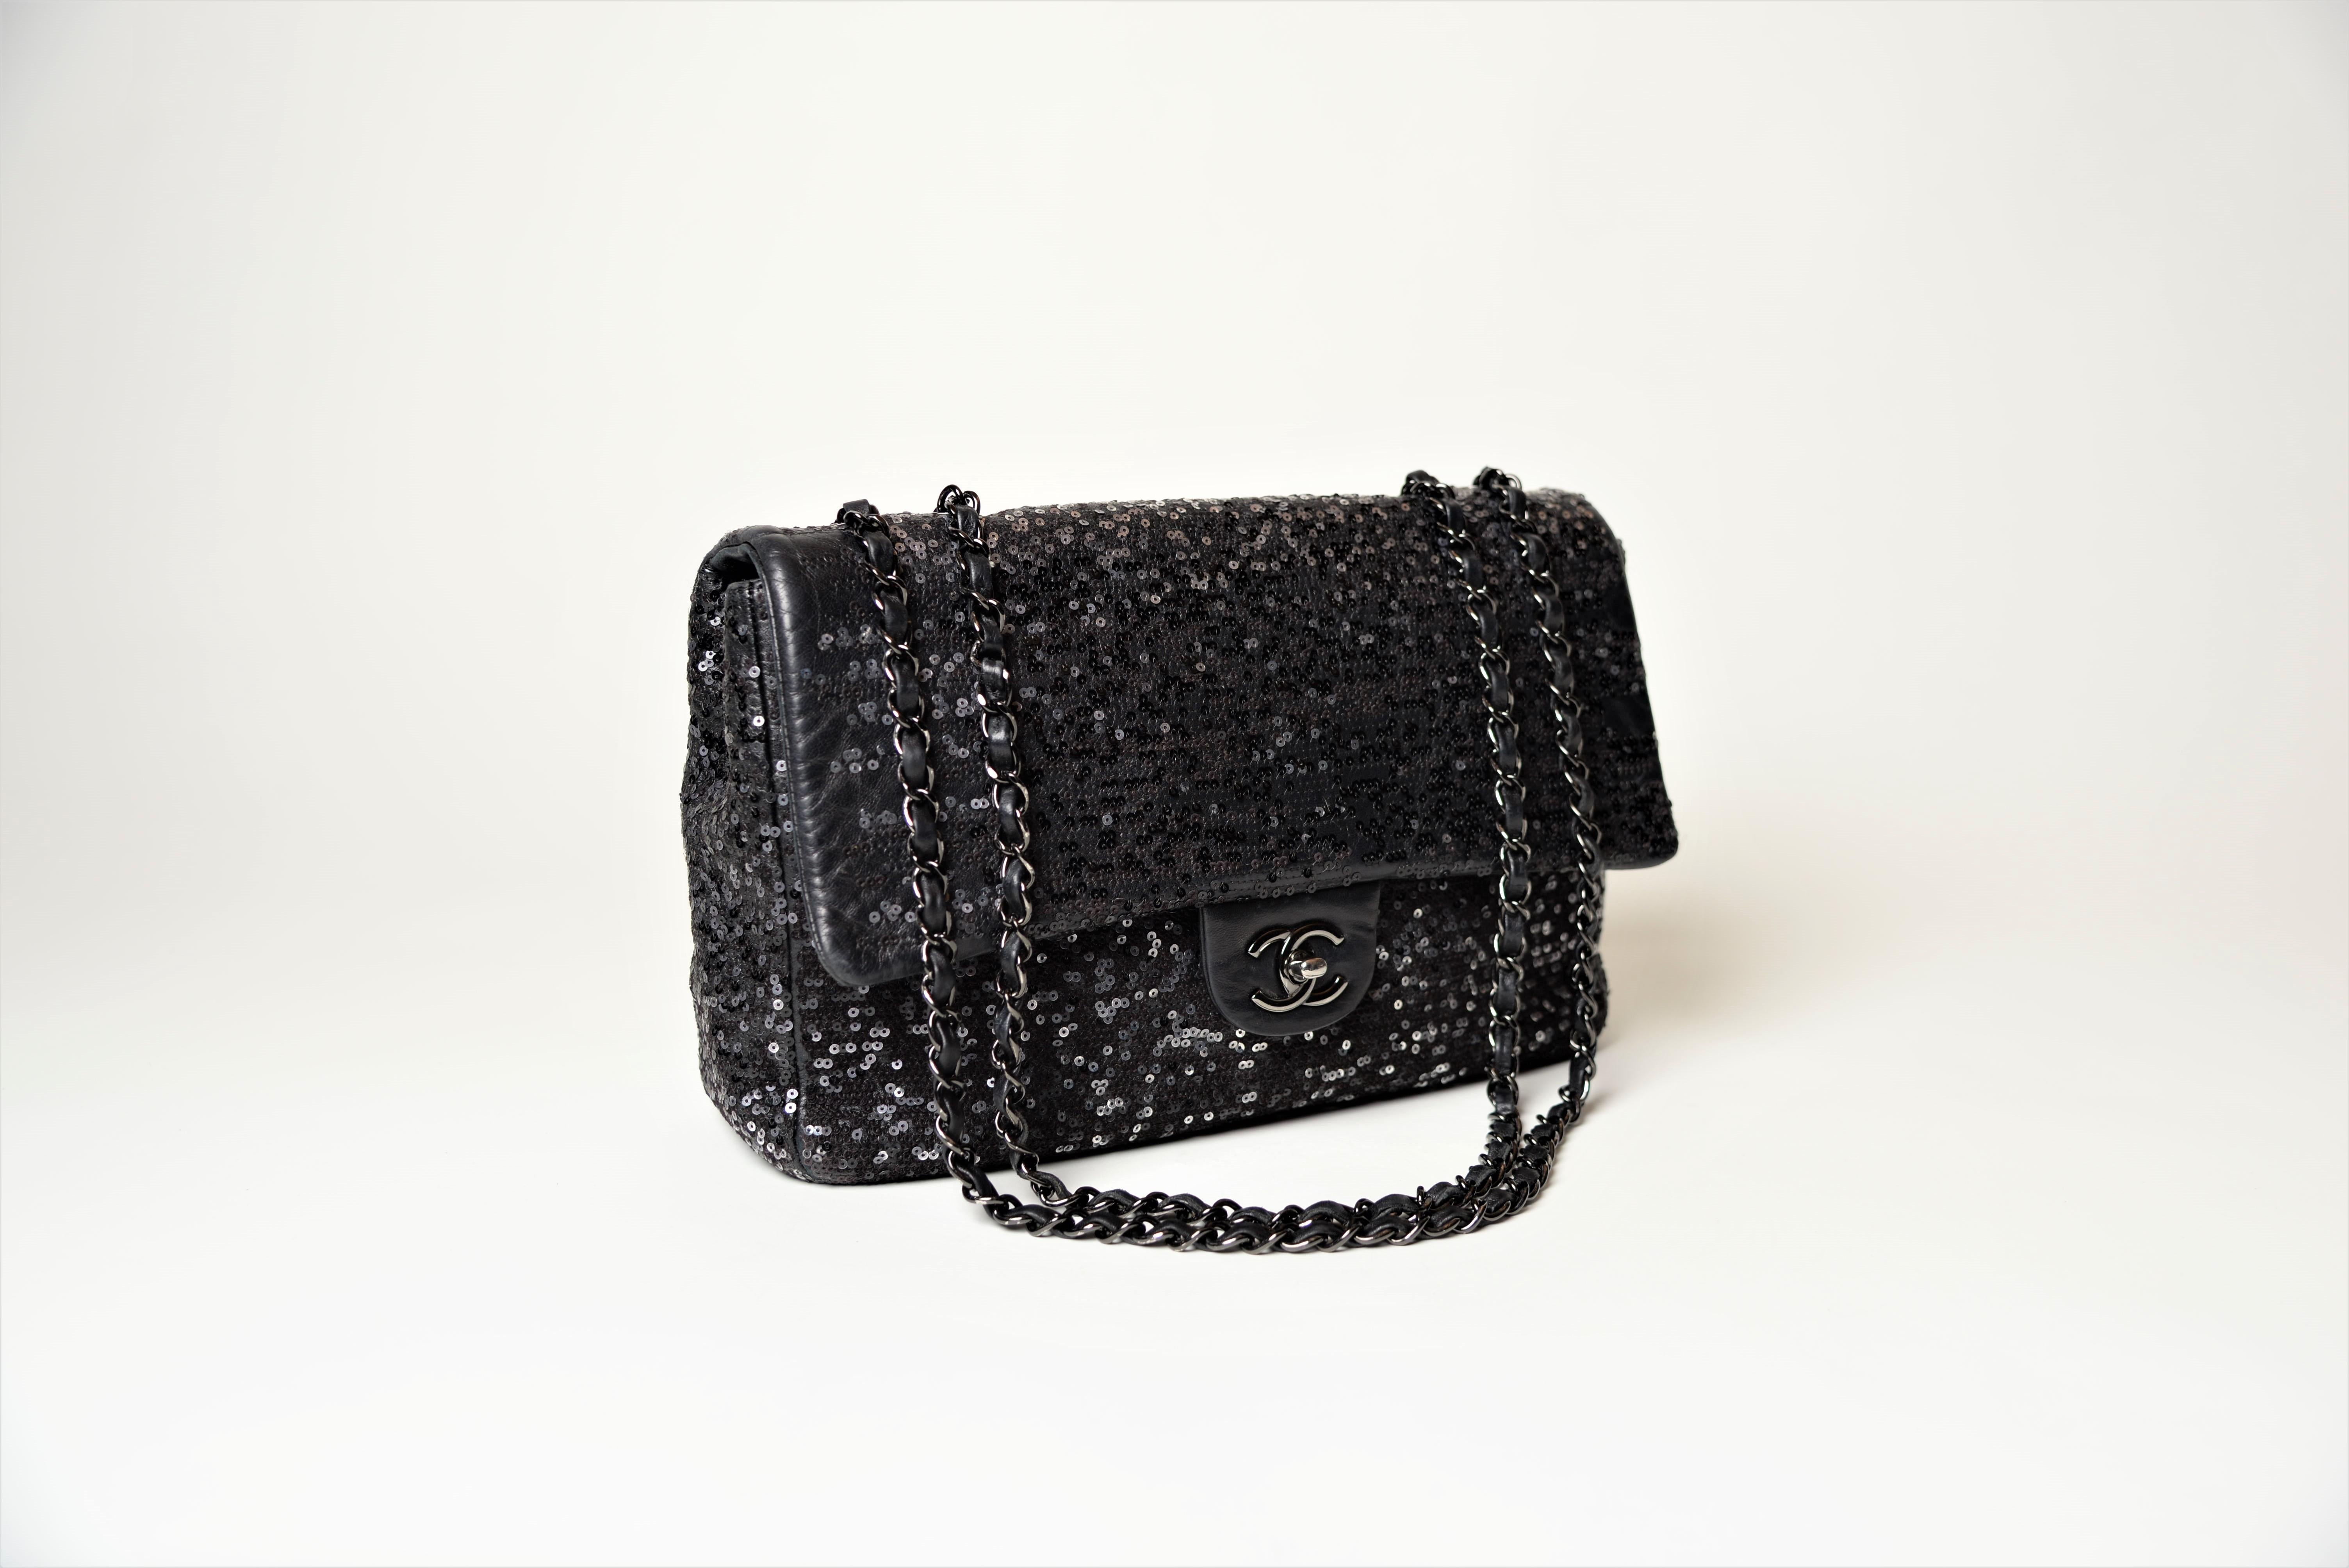 Black Chanel Jumbo Maxi Flap Sequins Moonlight on Water Bag